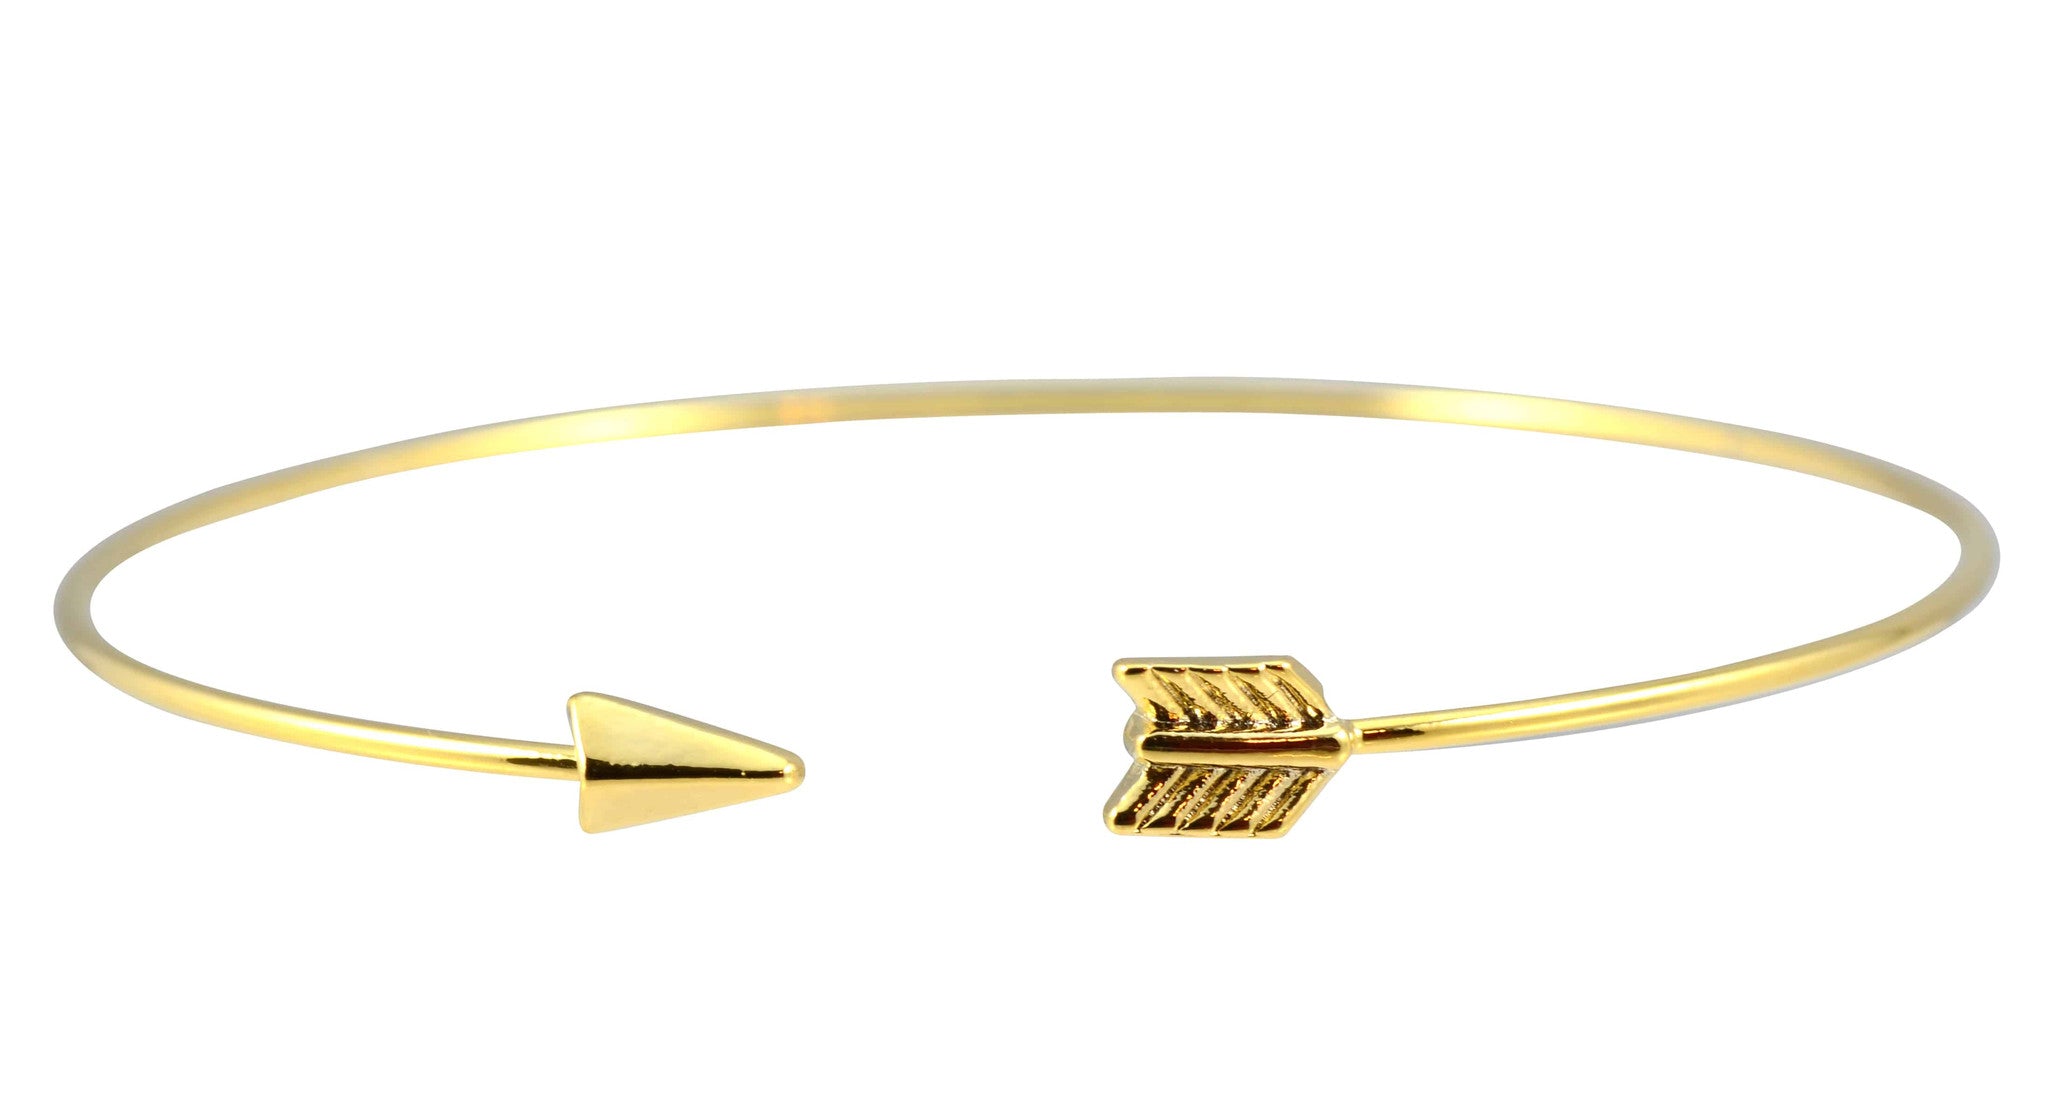 Buy Perfectly Average Infinity Cuff Bracelet online